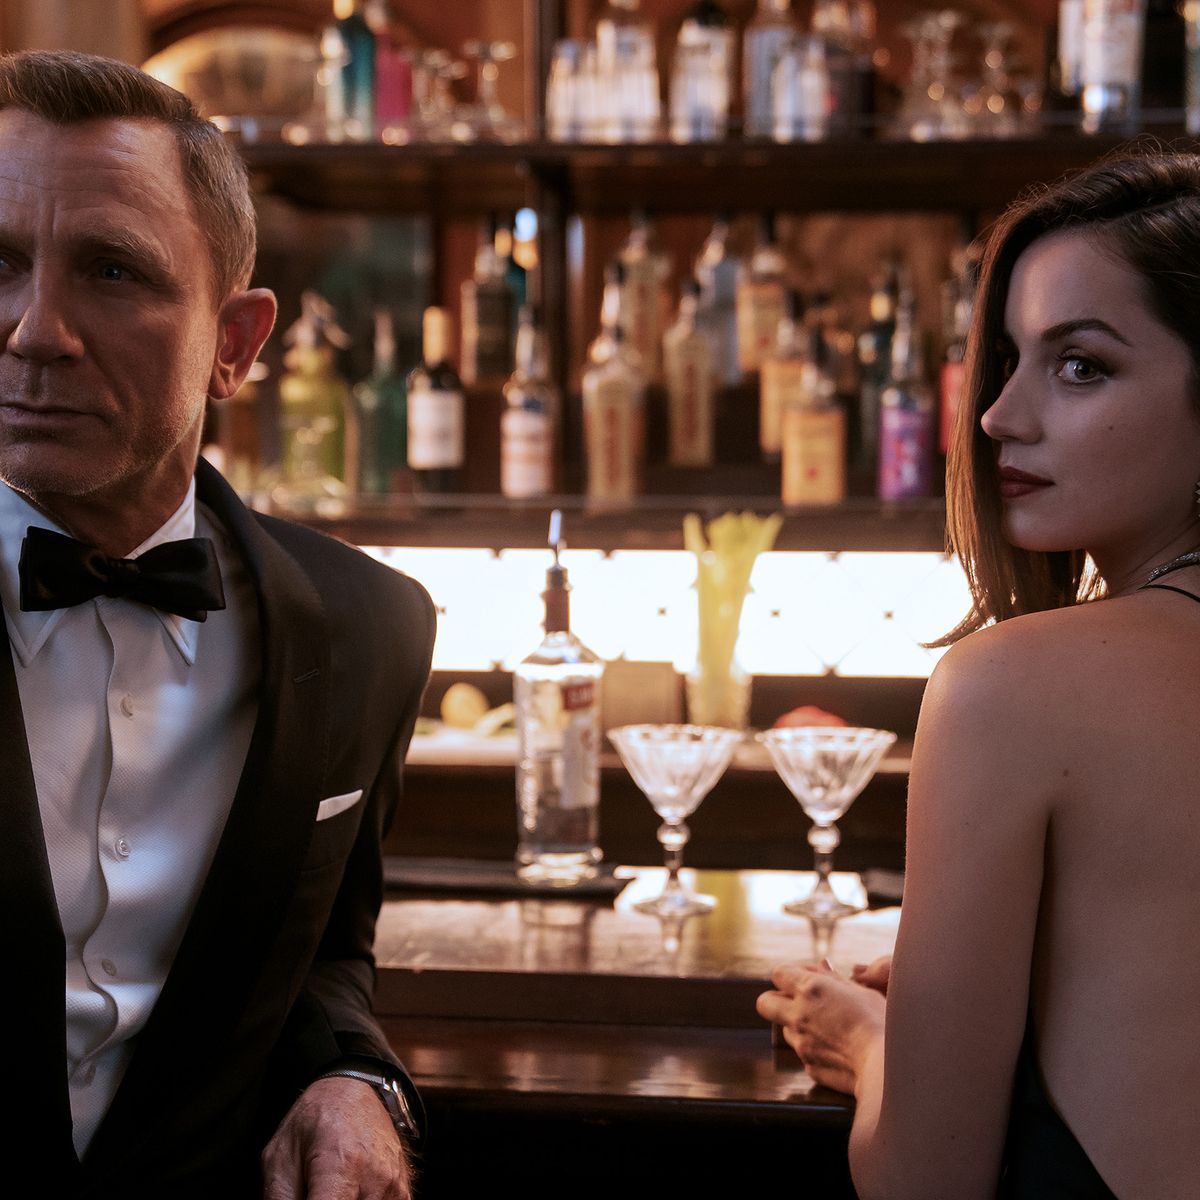 James Bond 007 - Diamonds are forever. Ana de Armas wears